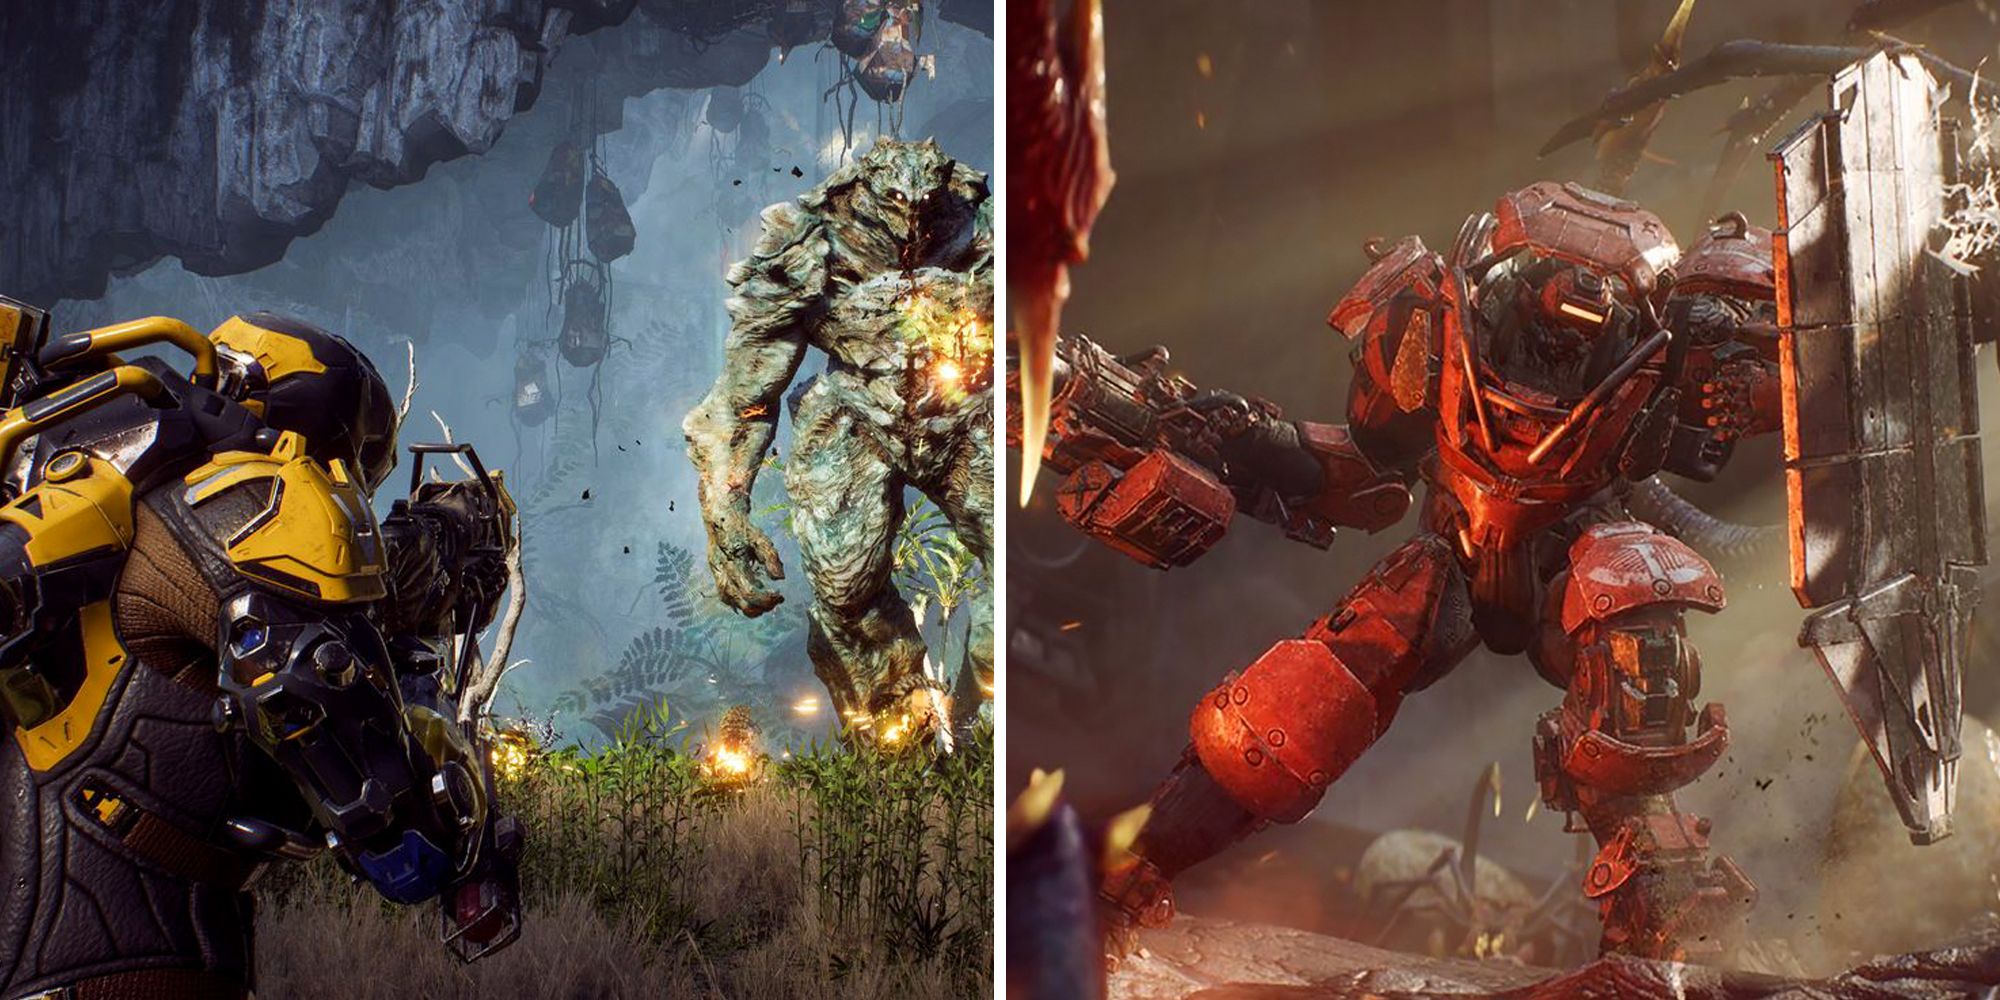 Split image. Anthem screenshots. Yellow javelin on the left, orange character on the right.